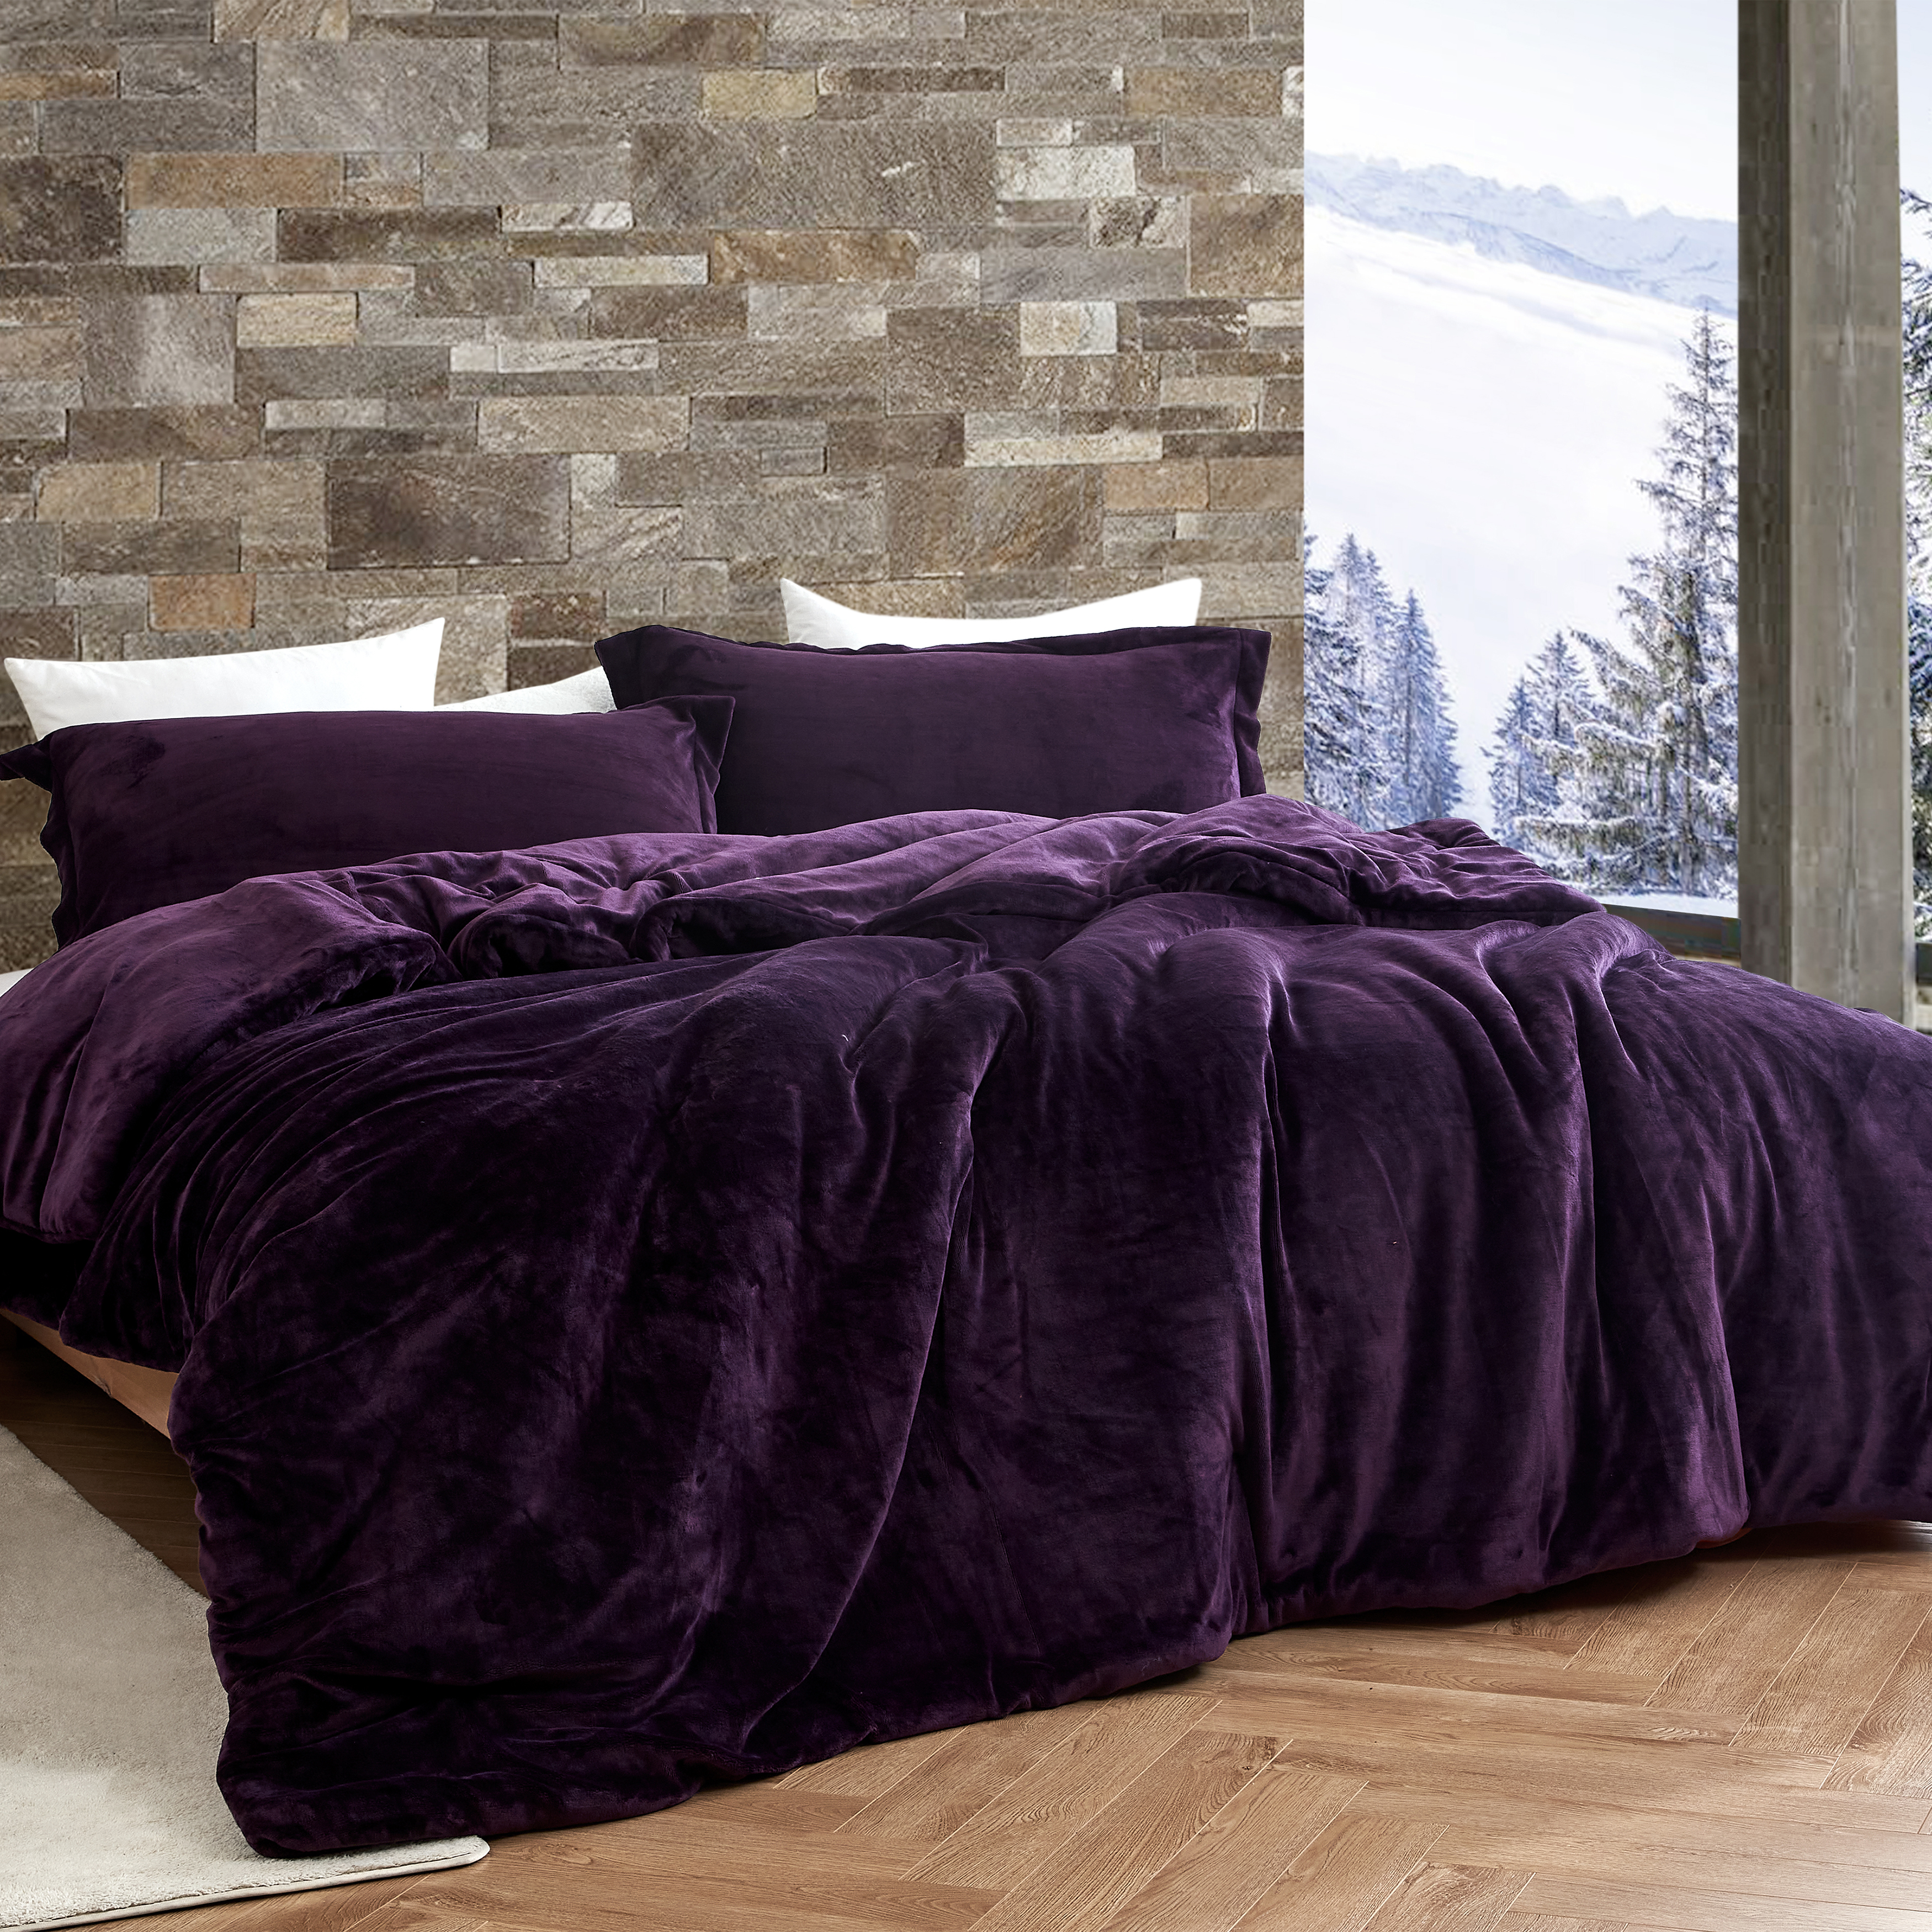 Coma Inducer® Oversized King Comforter - The Original Plush - Midnight Purple